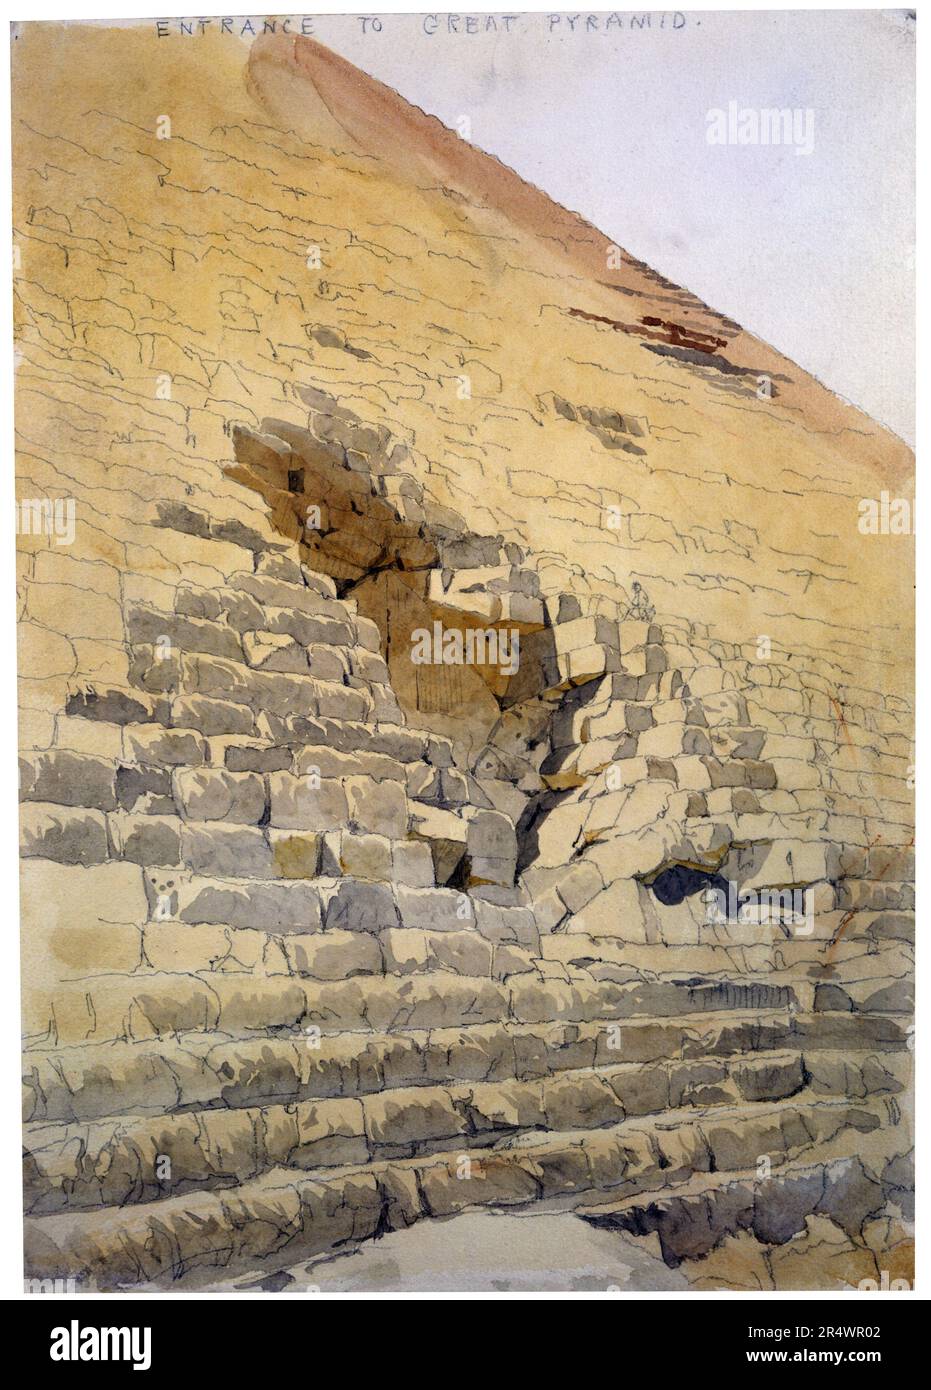 Entrance to the Great Pyramid'. Watercolour. Richard Phene Spiers (1838-1916) English Architect. Kufu Cheops Giza Egypt Archaeology Architecture Stock Photo